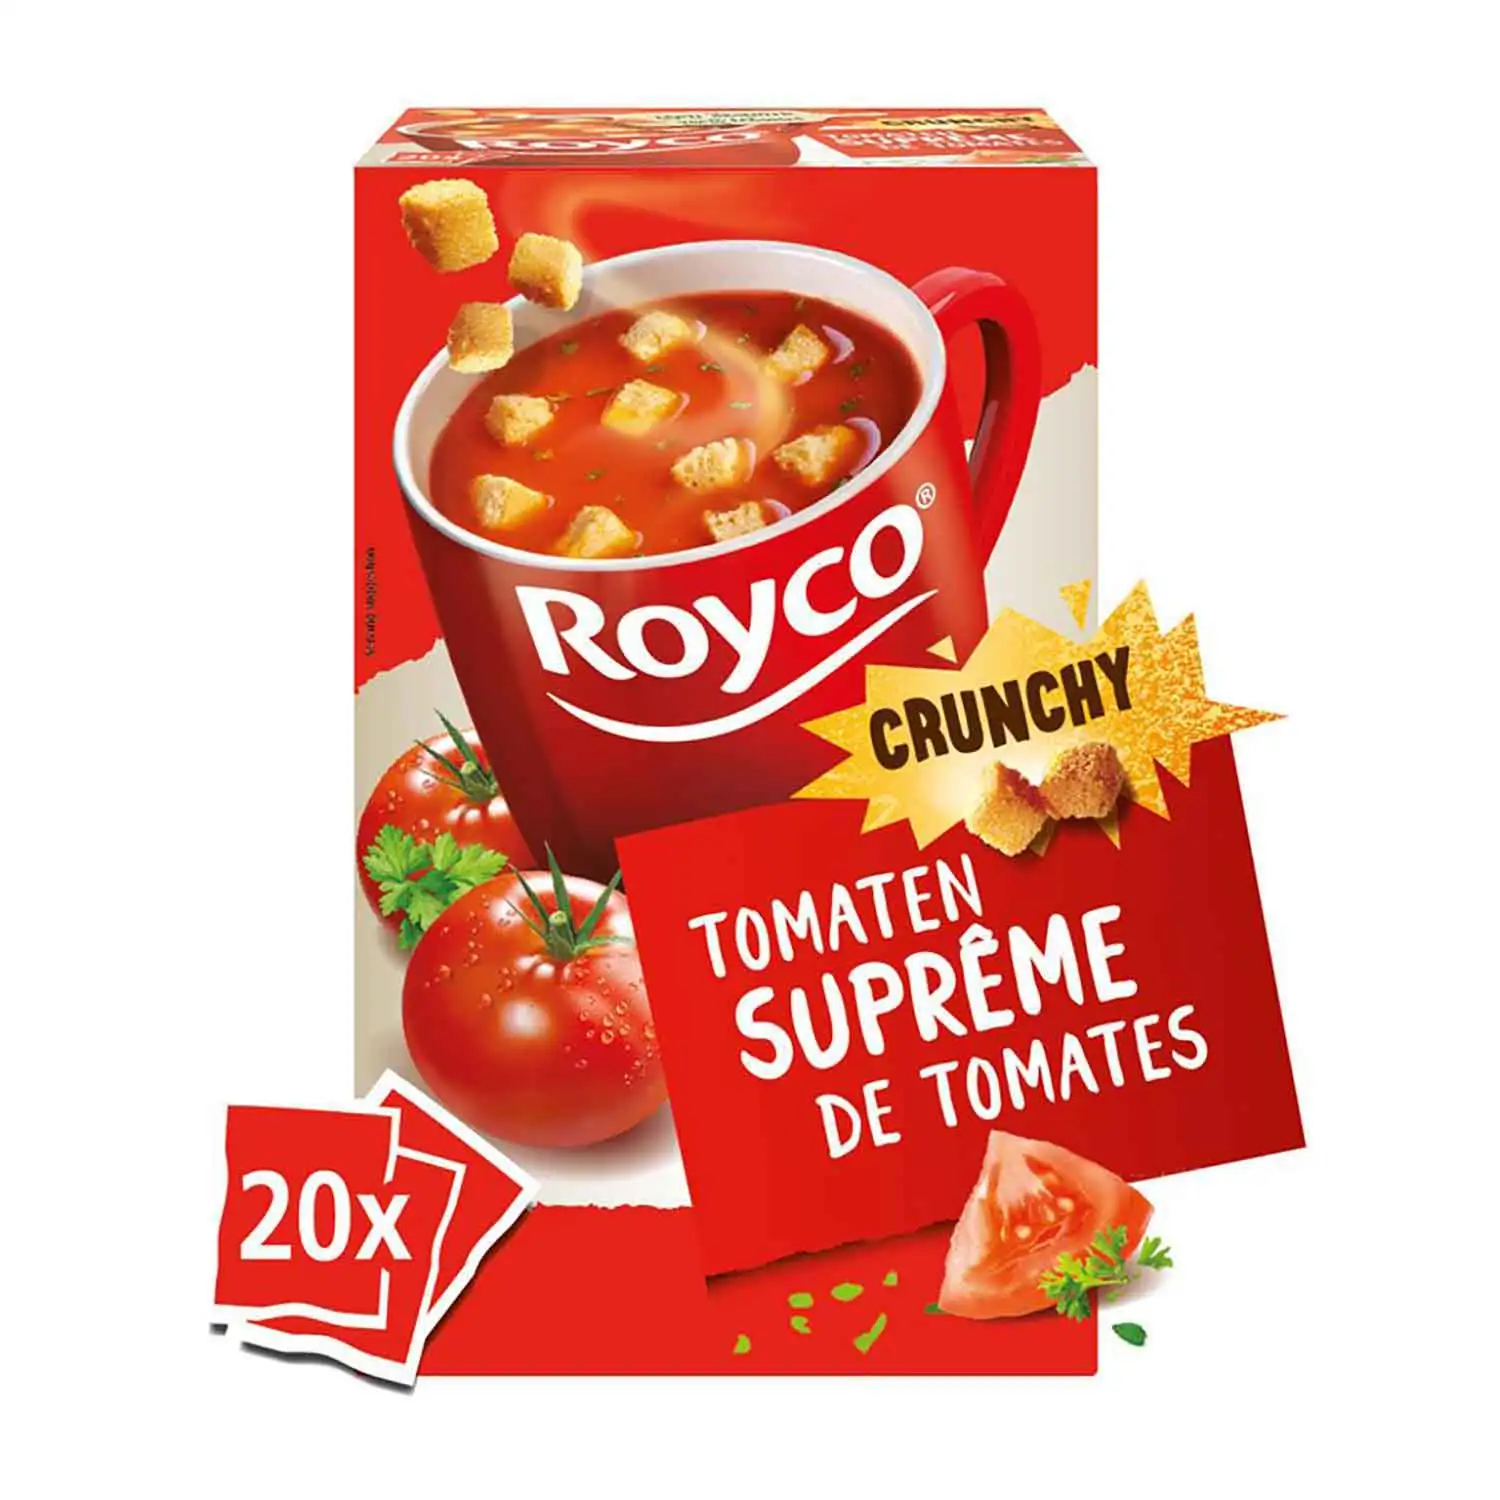 20x Royco crunchy supreme tomatoes 20,7g